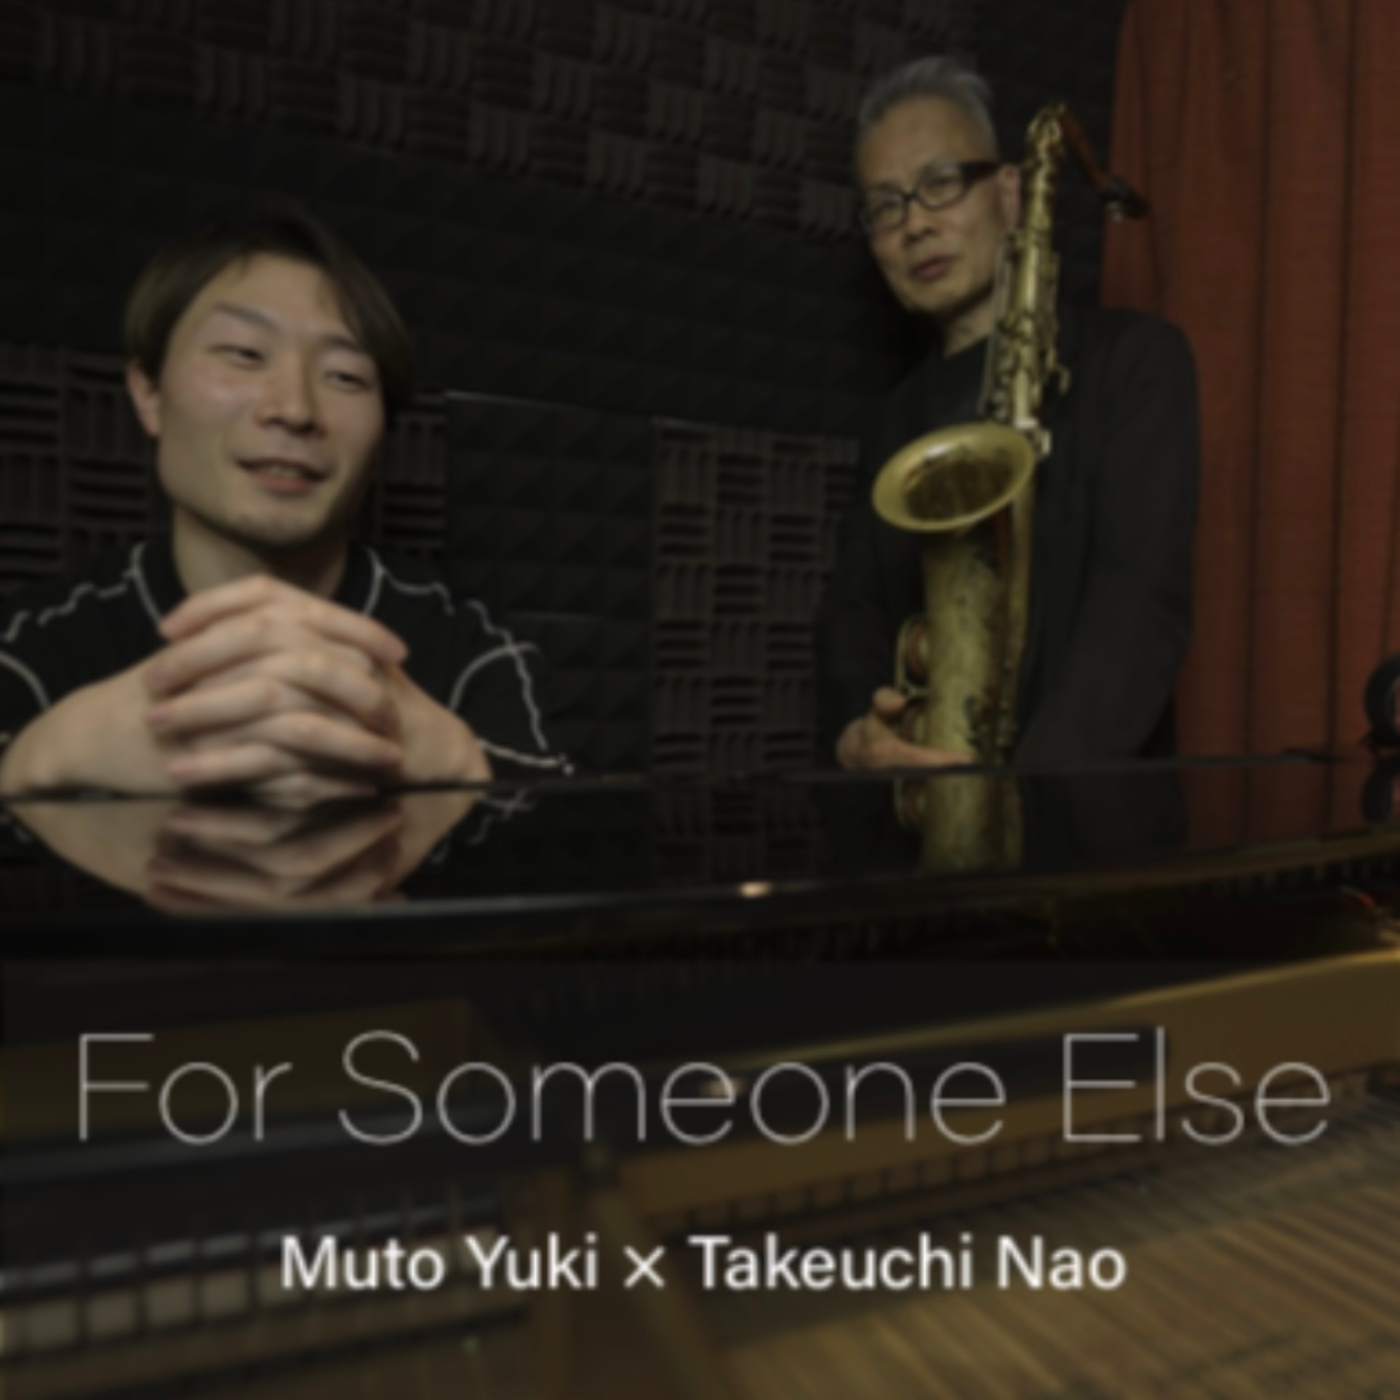 Muto Yuki x Takeuchi Nao　 "For Someone Else"